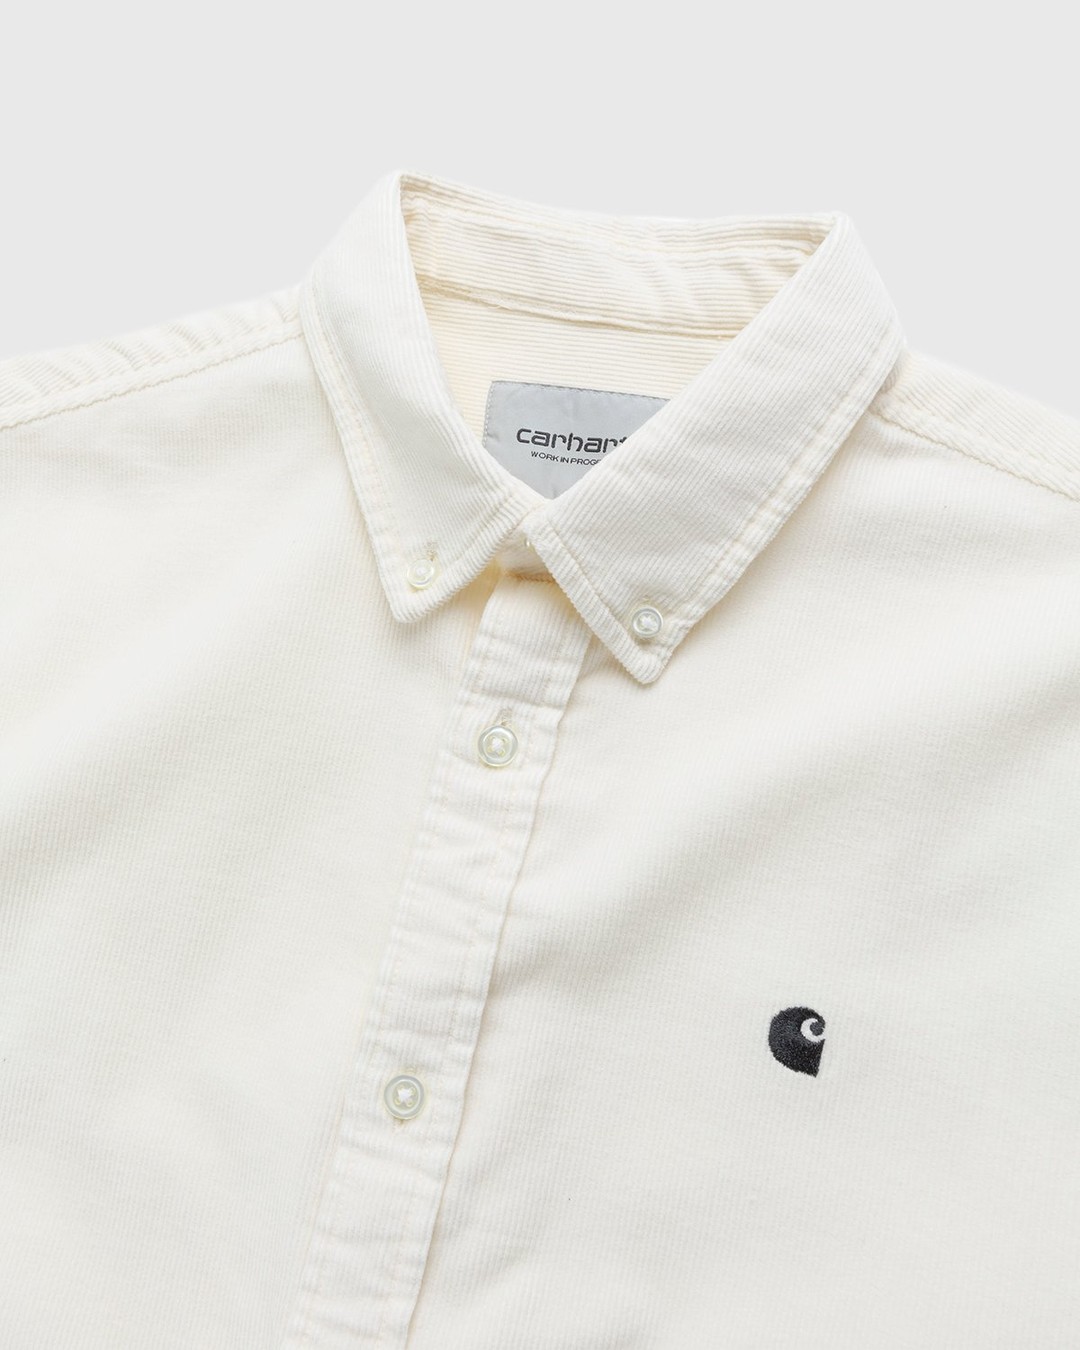 Carhartt WIP – Madison Finde Cort Shirt Wax Black - Longsleeve Shirts - Black - Image 3